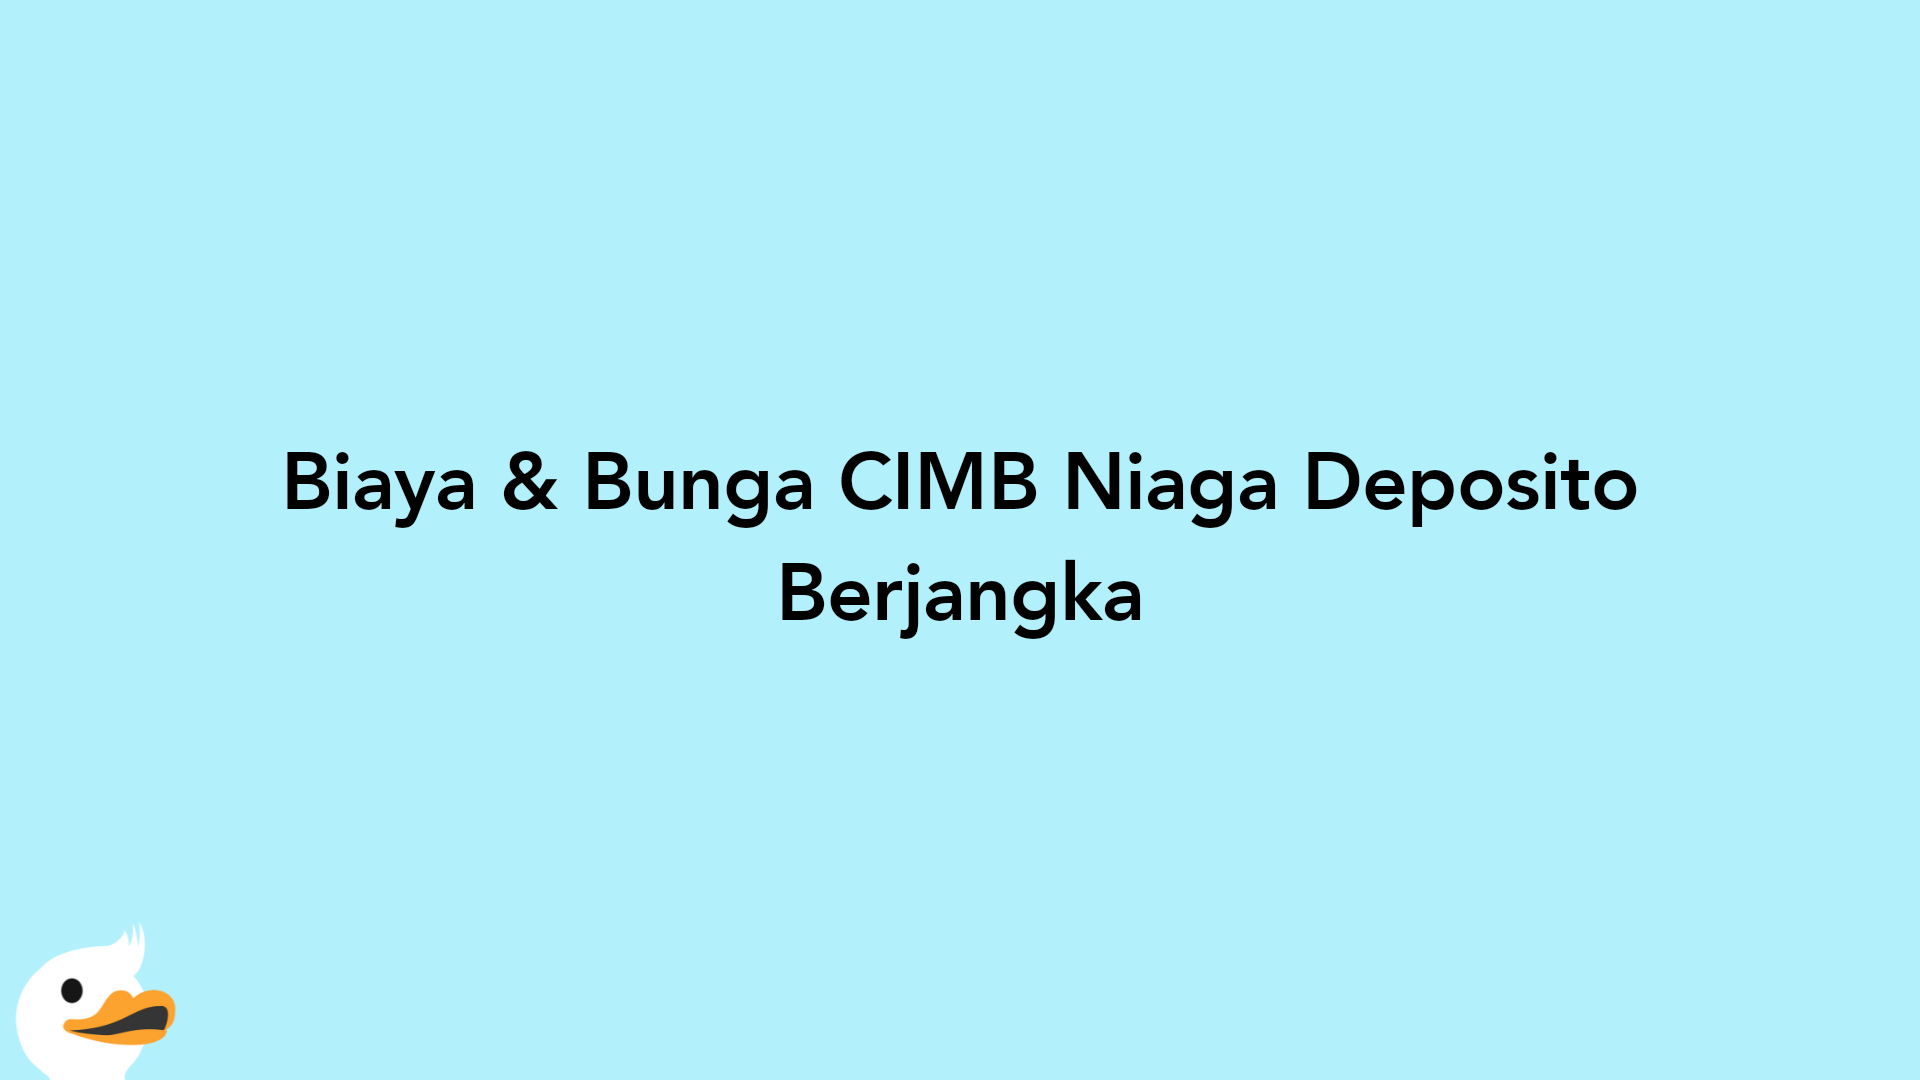 Biaya & Bunga CIMB Niaga Deposito Berjangka